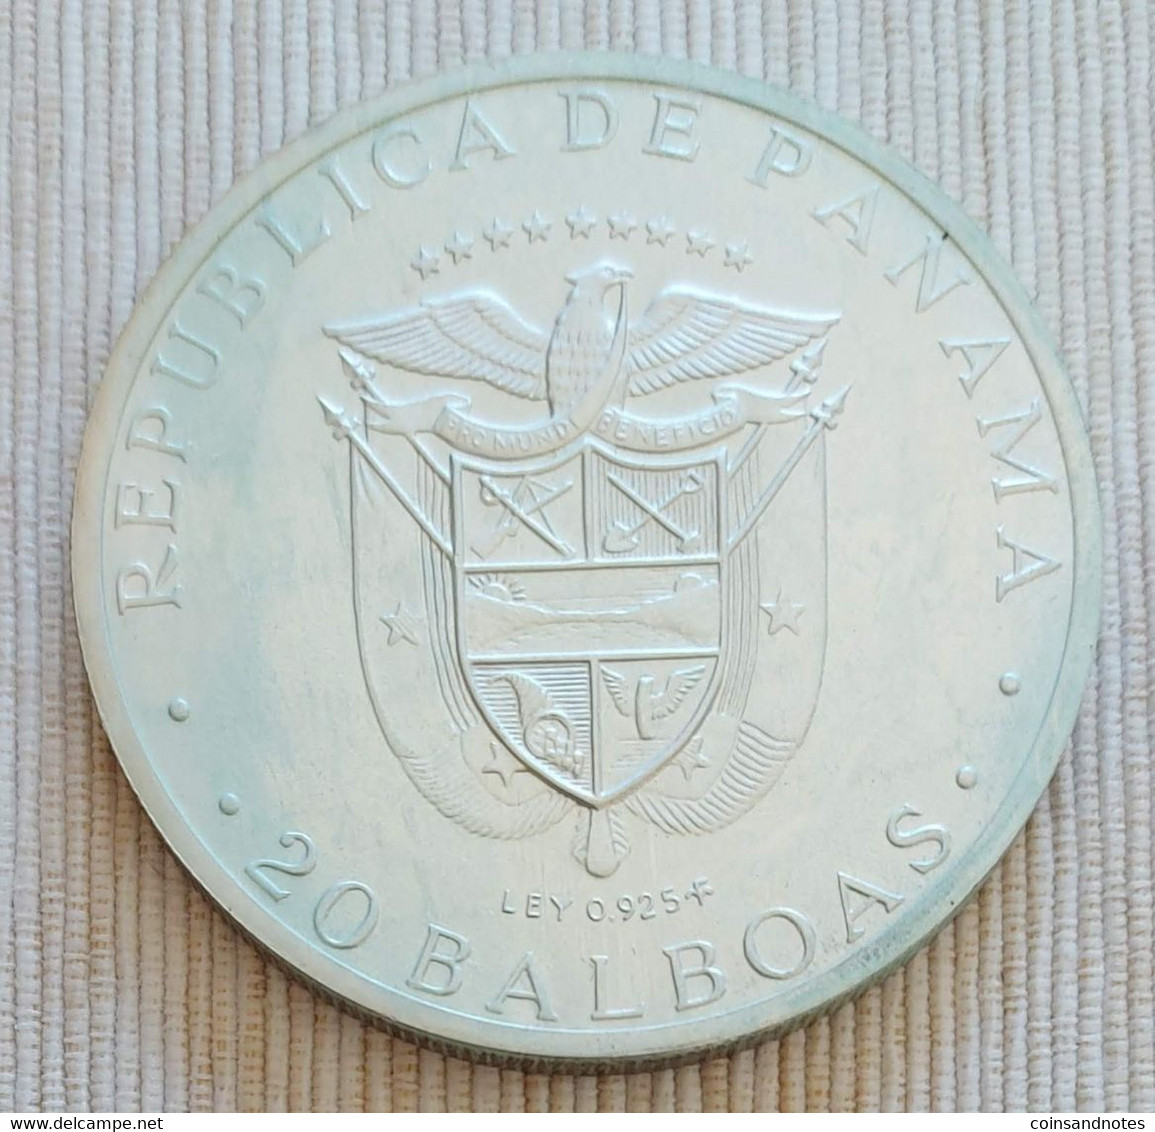 Panama 1973 - 20 Balboas - Simón Bolívar (1783-1830) - .925 Silver - KM# 31 - Other - America